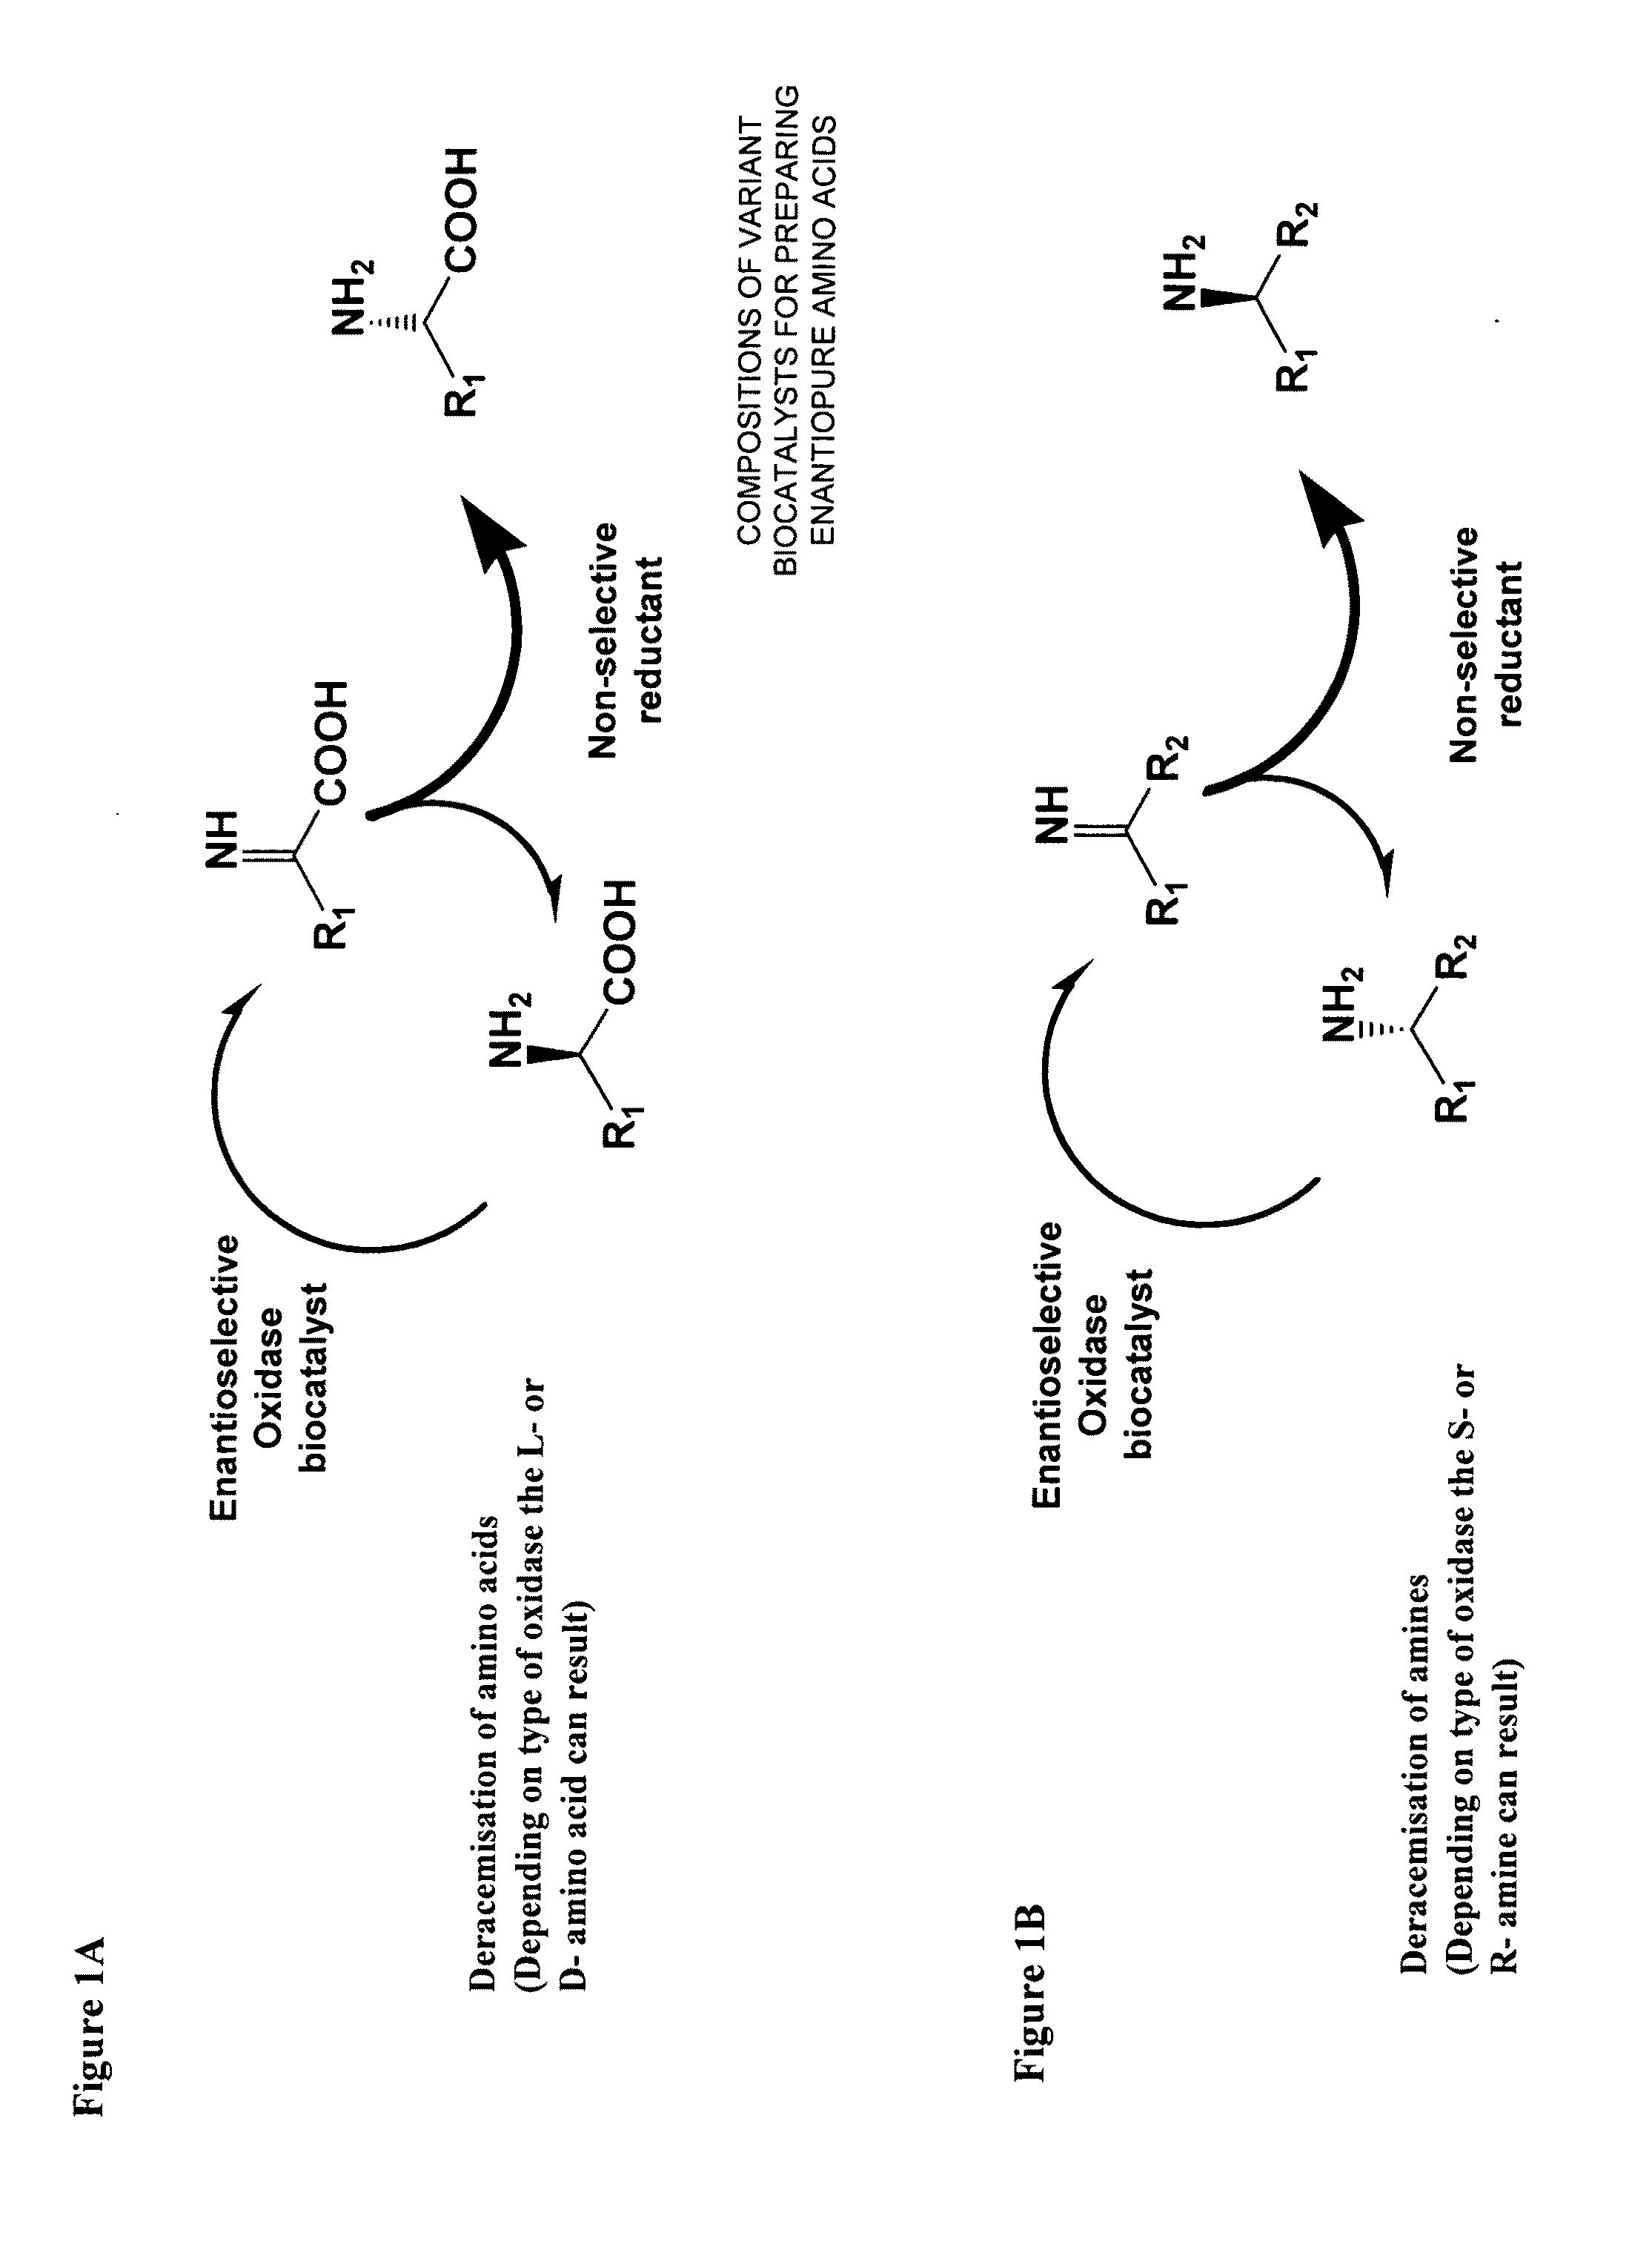 Compositions of variant biocatalysts for preparing enantiopure amino acids